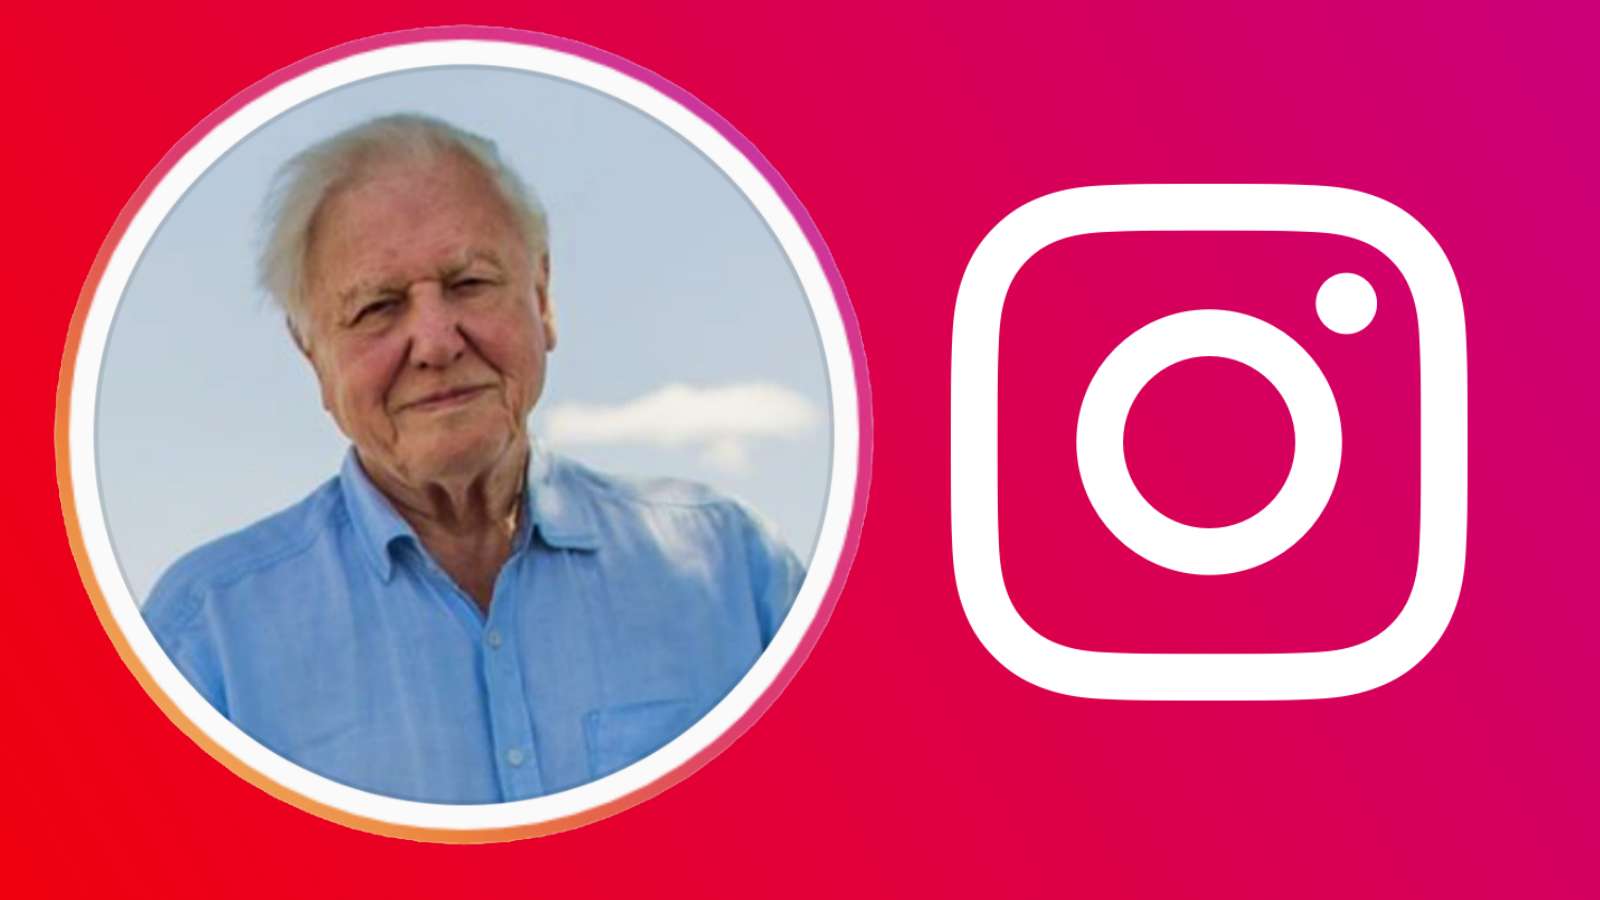 David Attenborough on Instagram